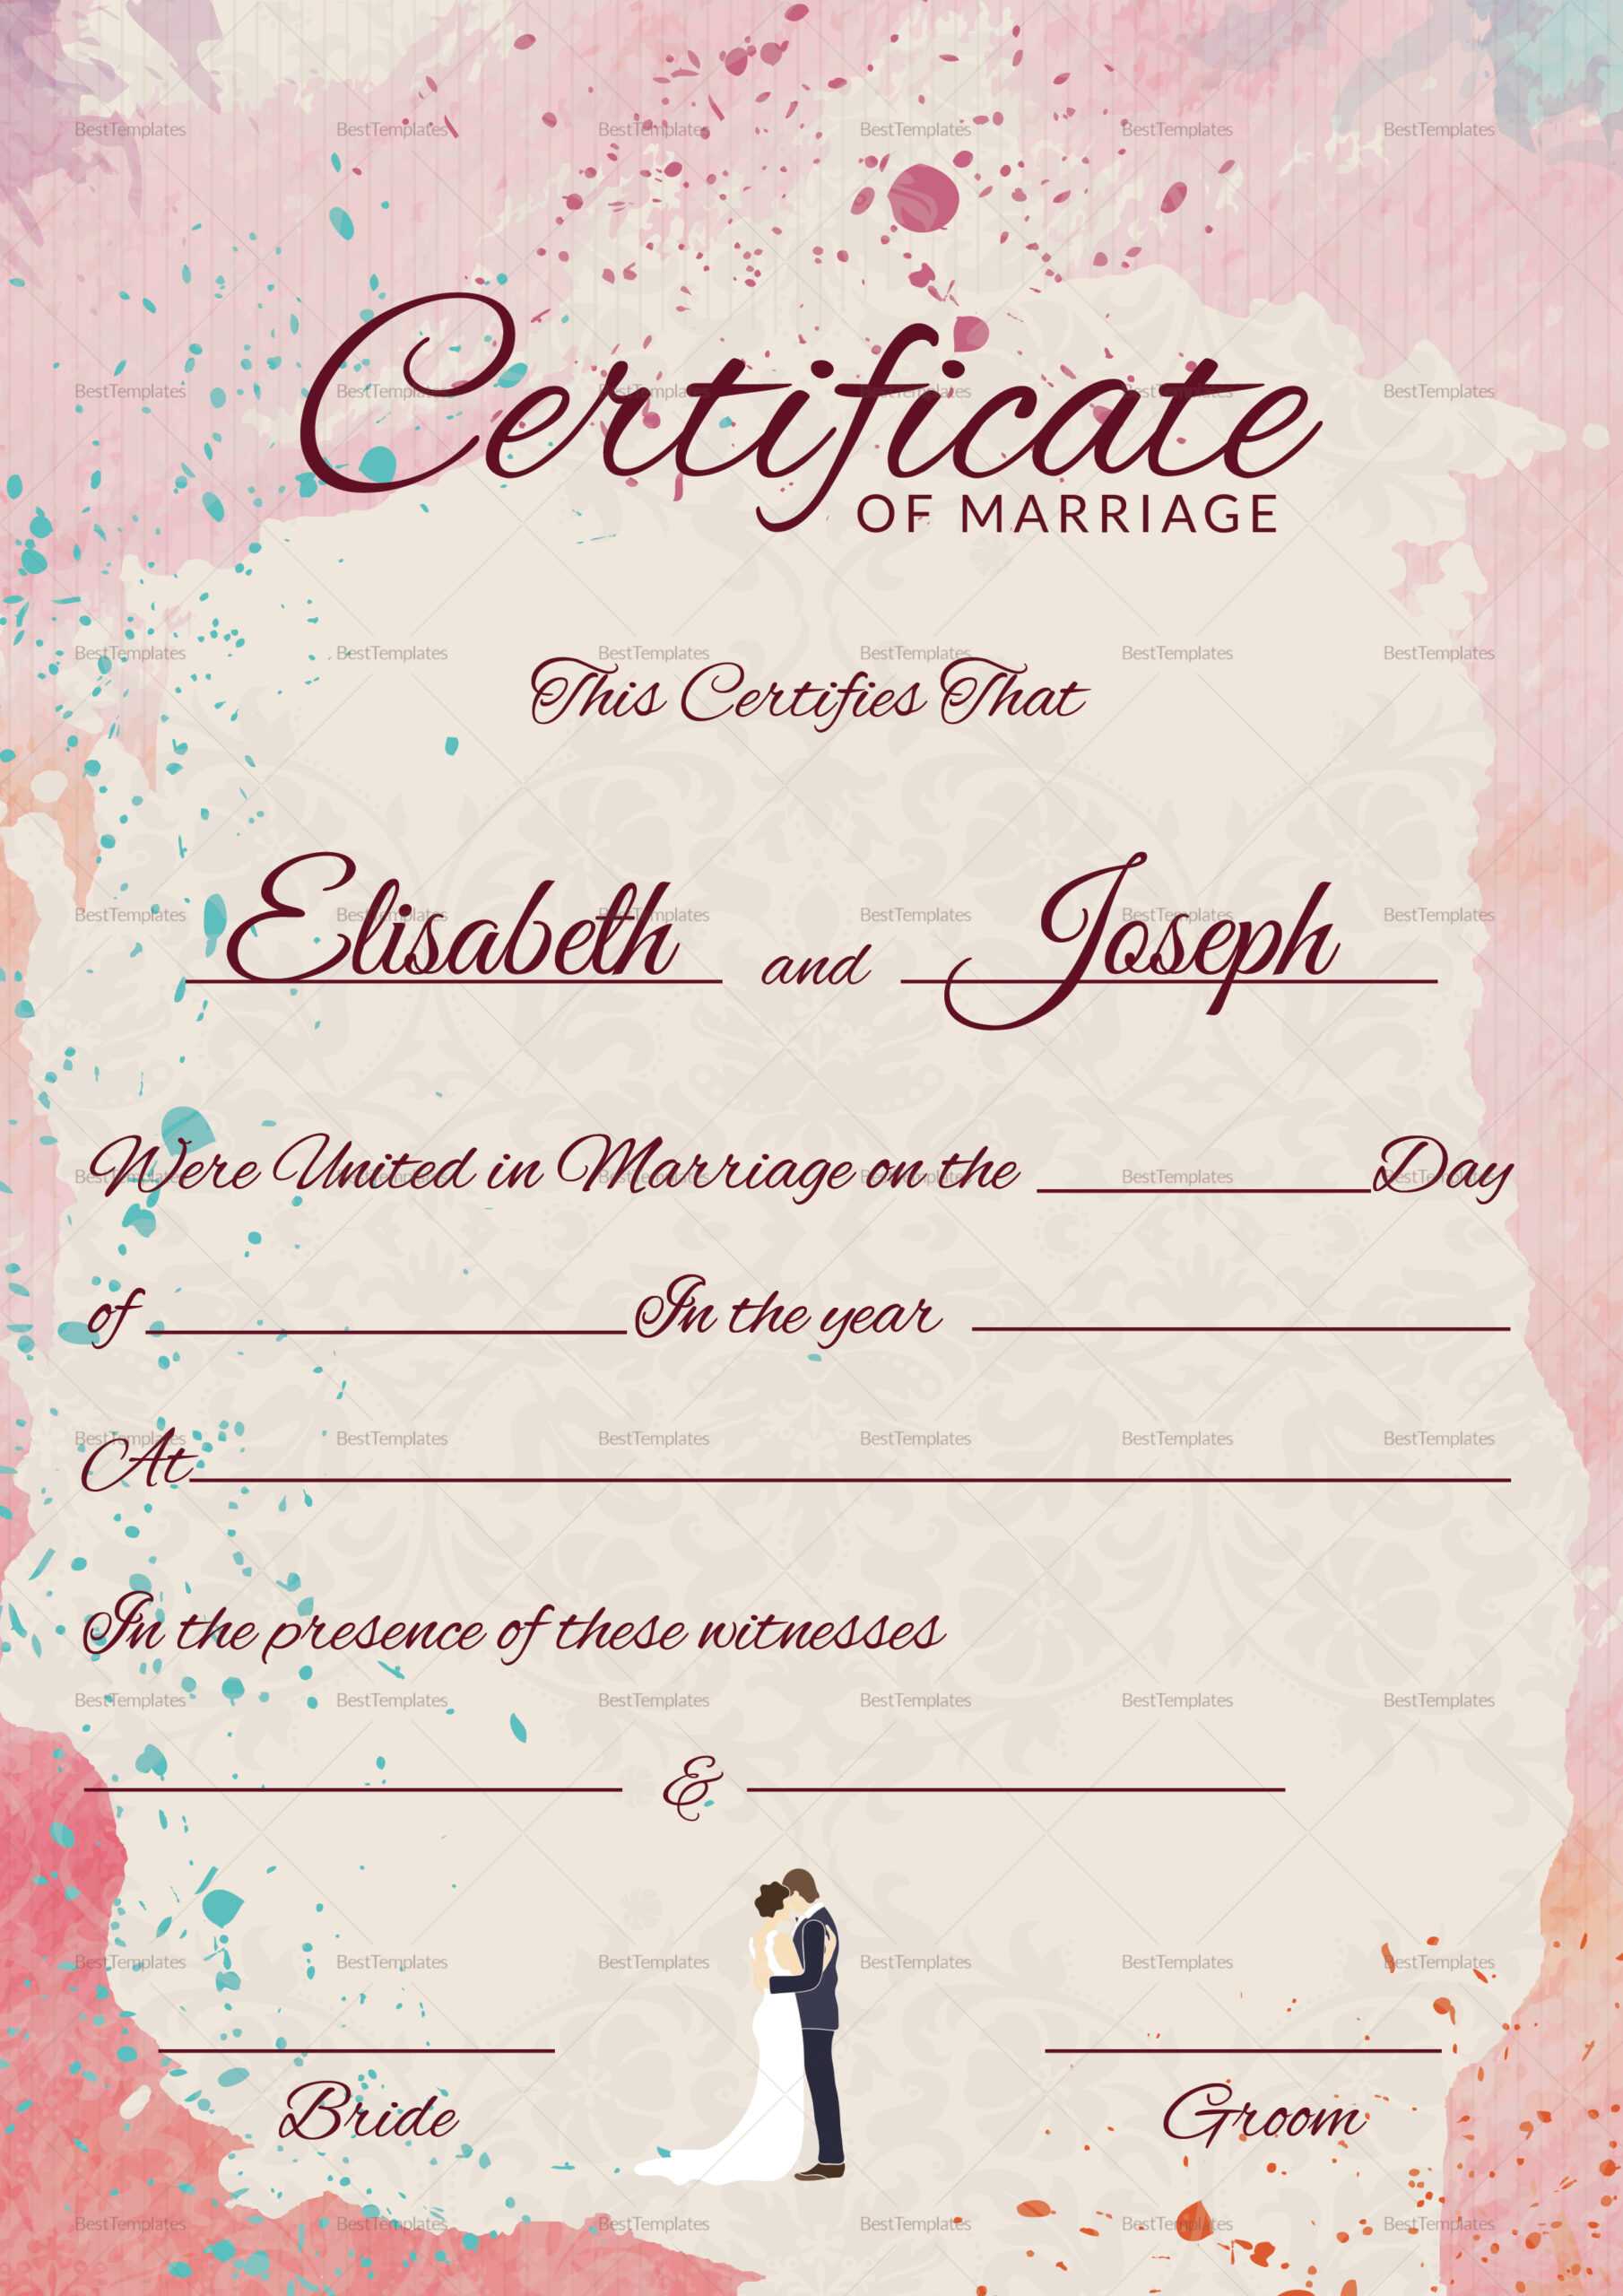 Marriage Certificate Design - Kaser.vtngcf Inside Blank Marriage Certificate Template